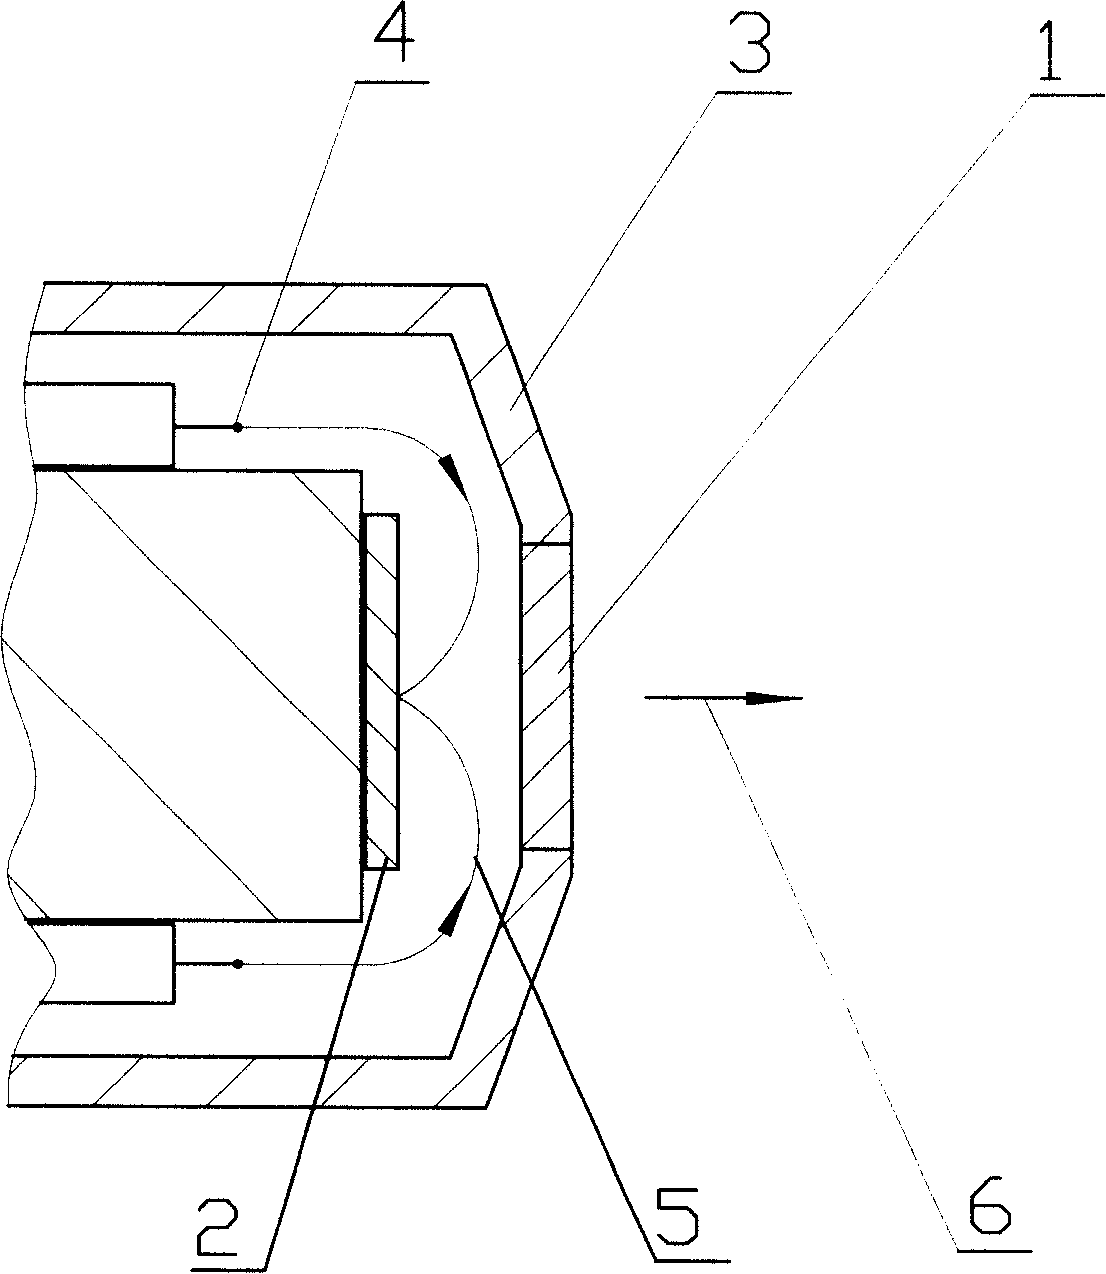 End-window X ray tube